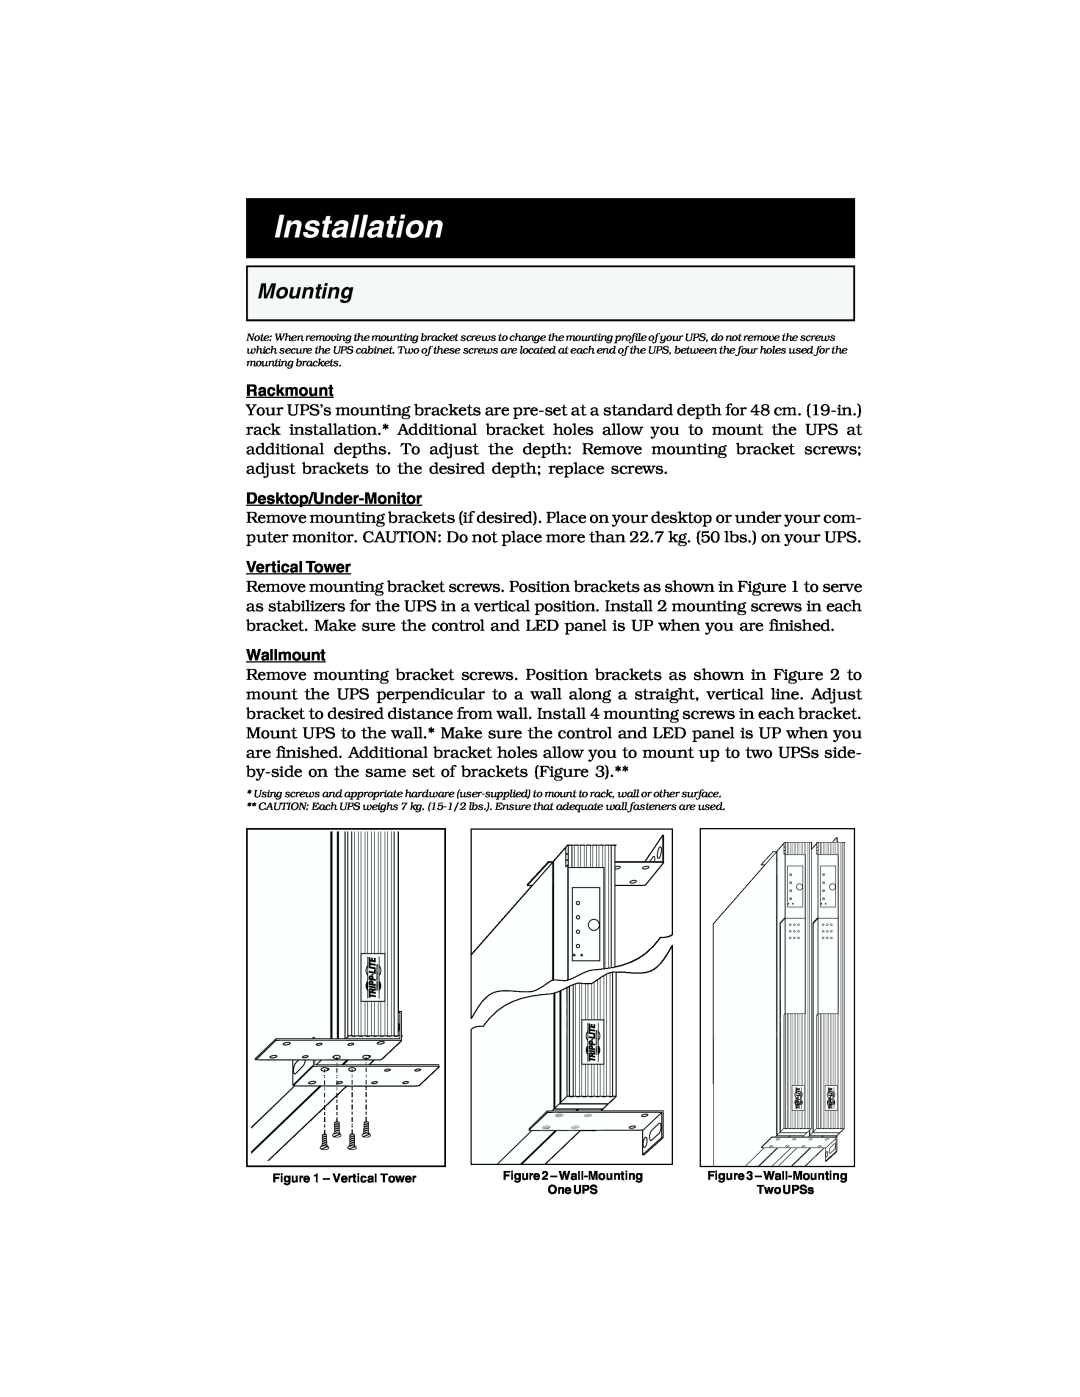 Tripp Lite 450 RTI specifications Installation, Rackmount, Desktop/Under-Monitor, Vertical Tower, Wallmount 